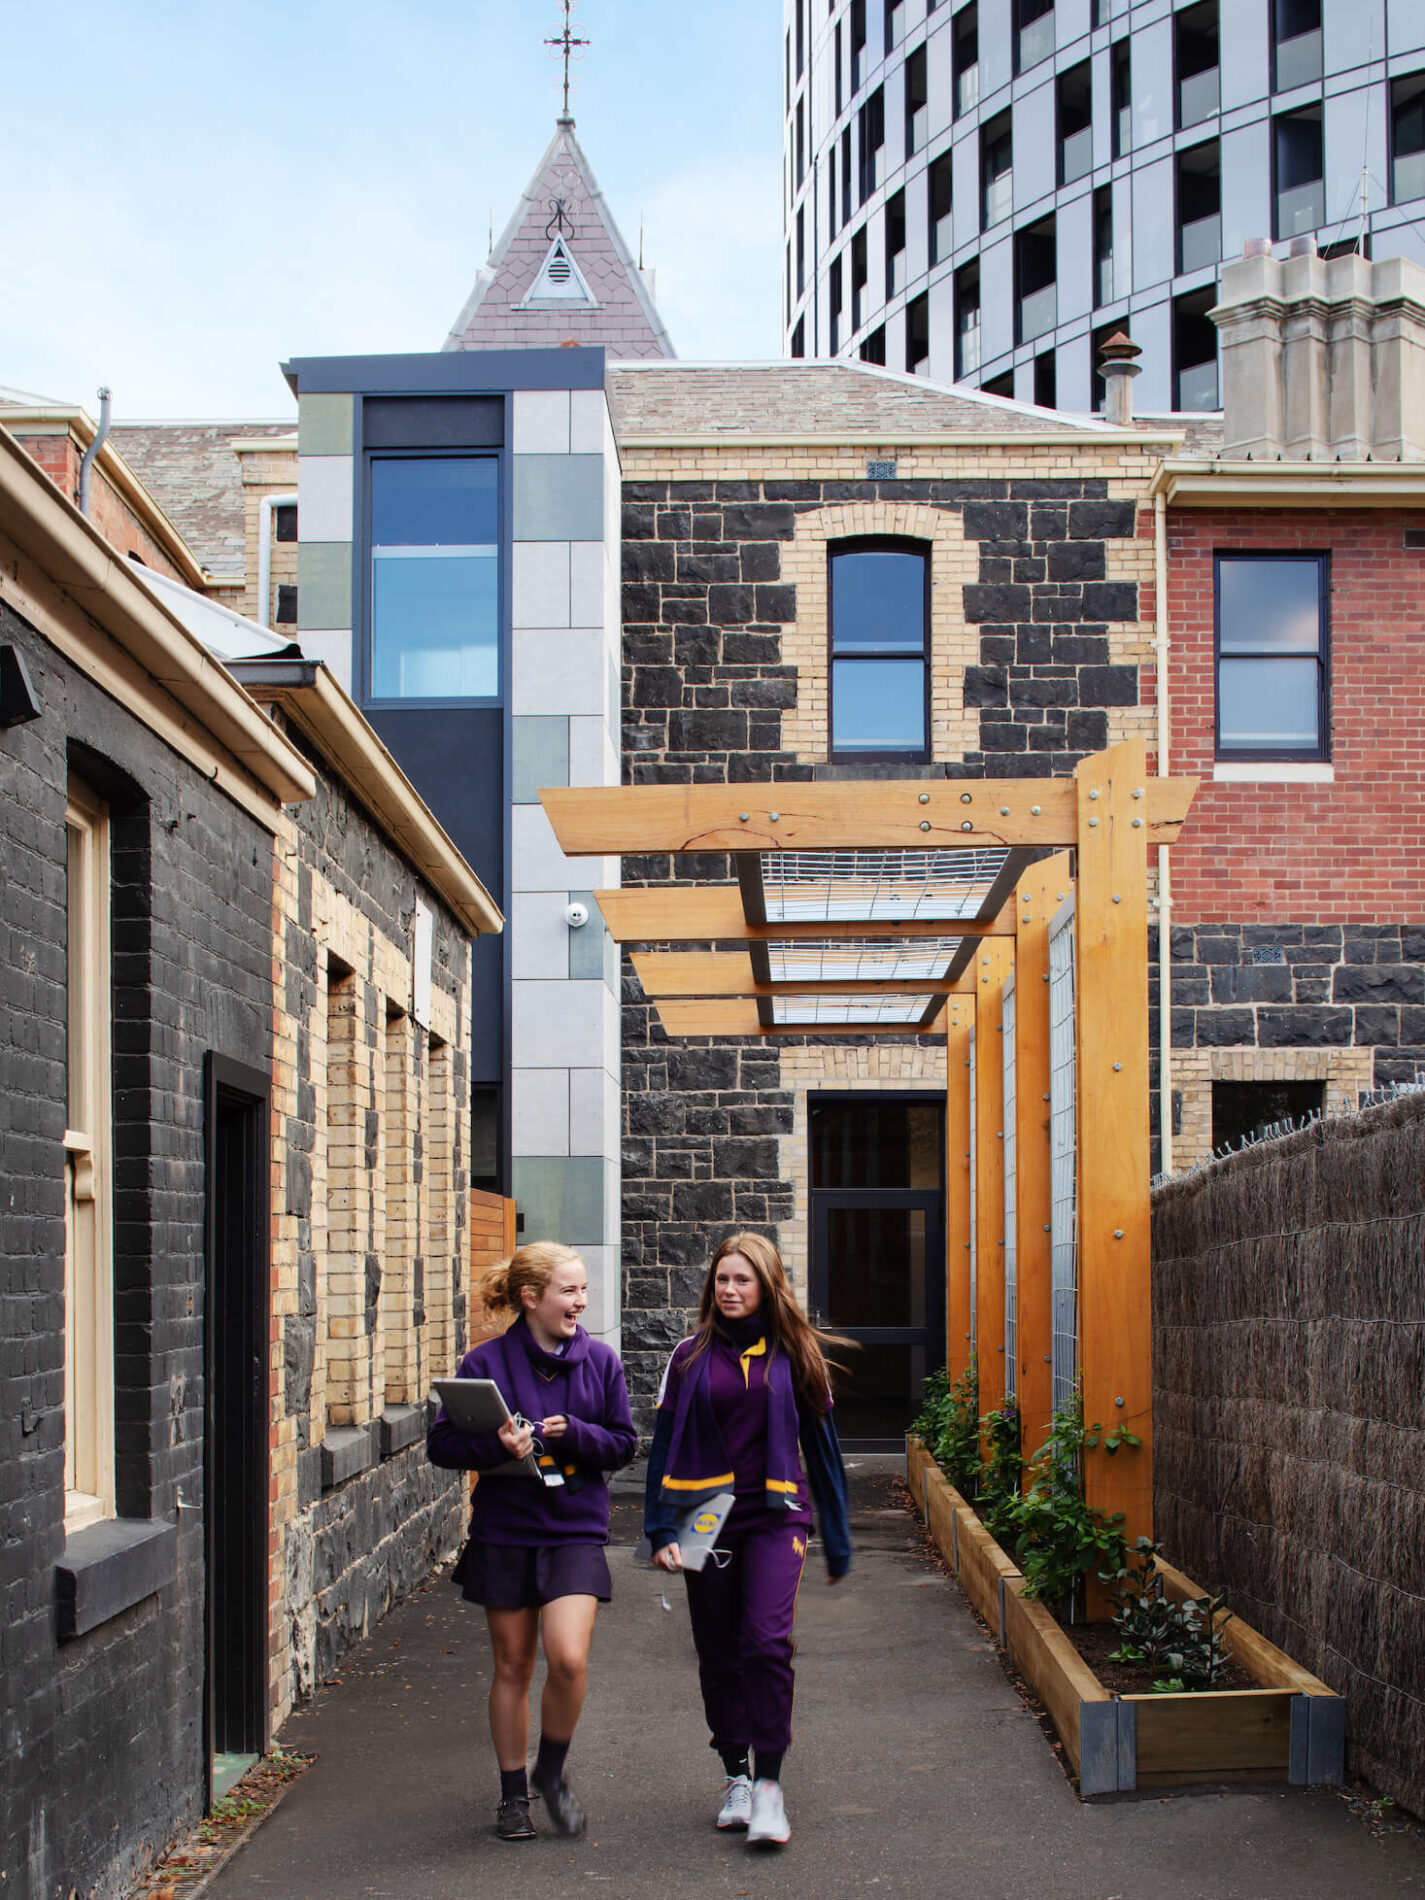 Two students in purple uniforms walk together along outdoor walkway leaving historic bluestone building, timber trellis alongside